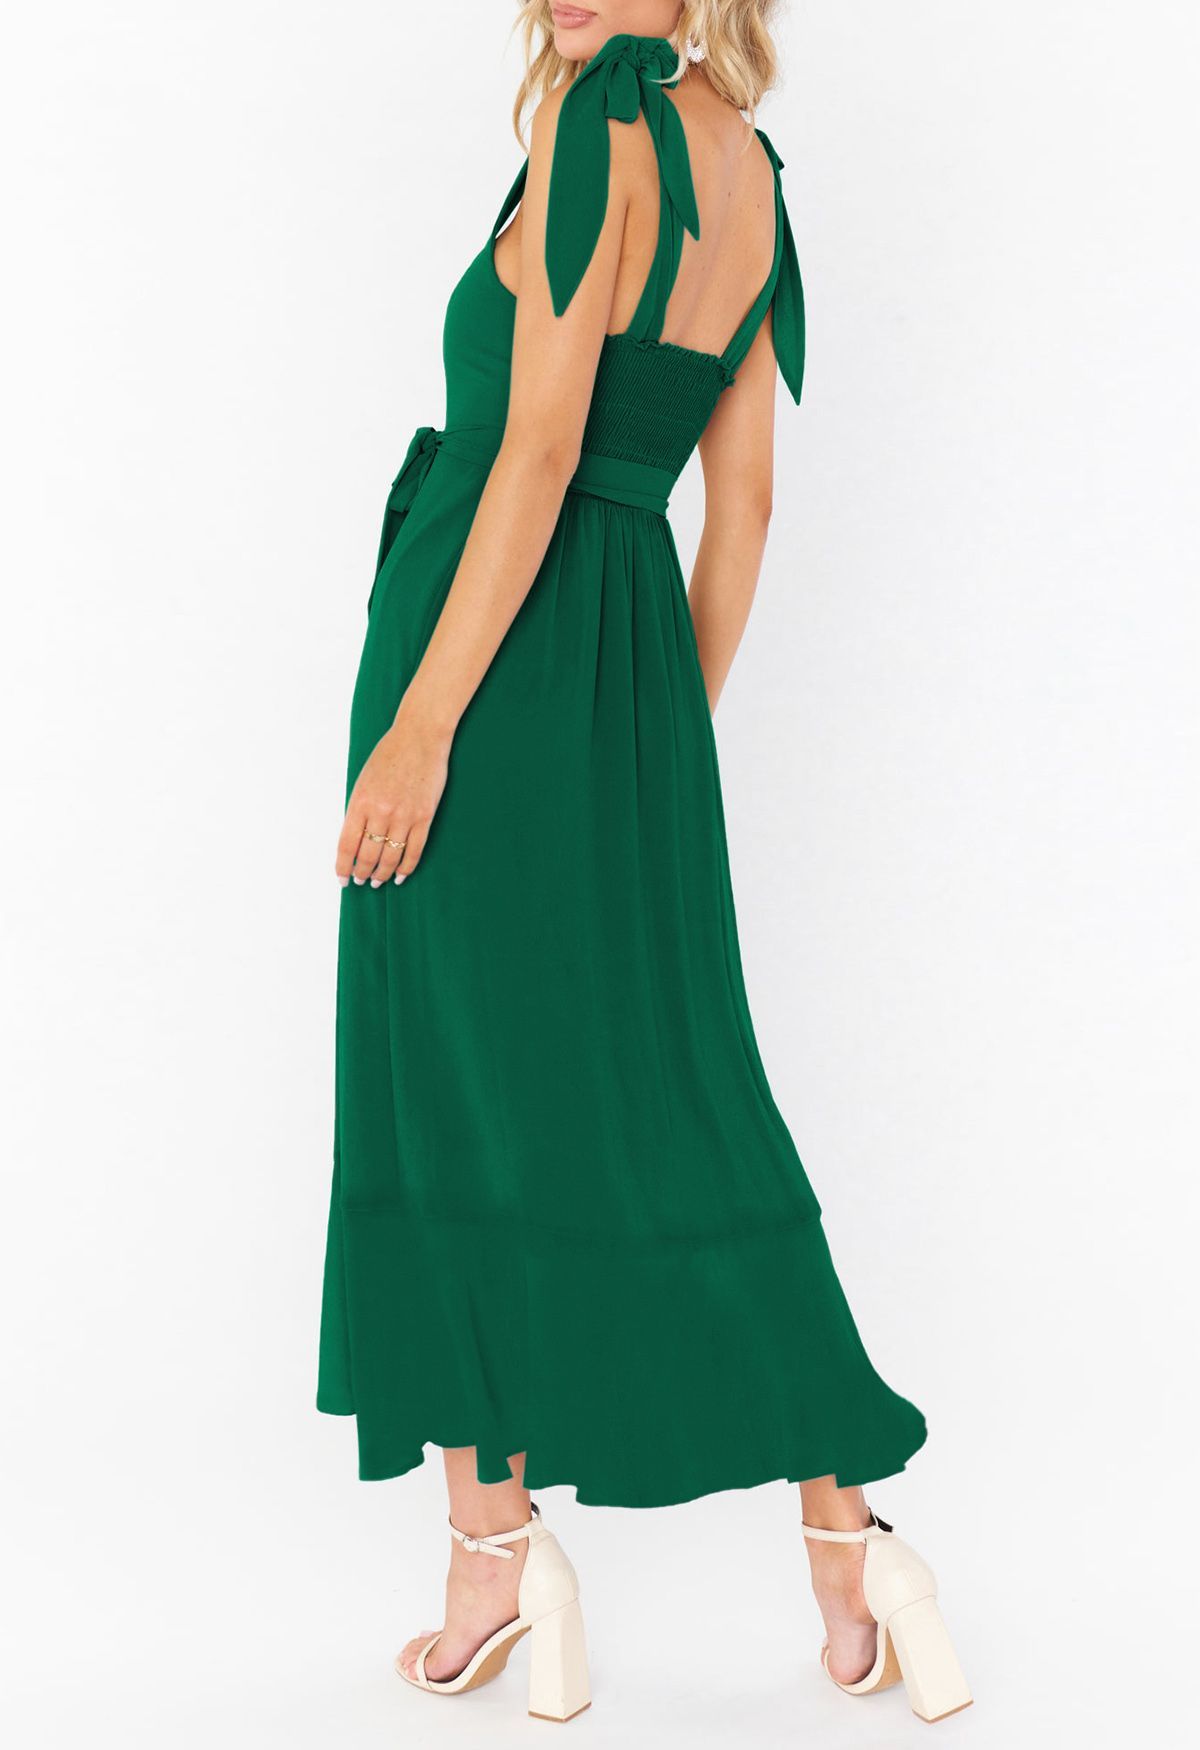 Ruffle Hem Tie-Shoulder Cami Dress in Green | Chicwish